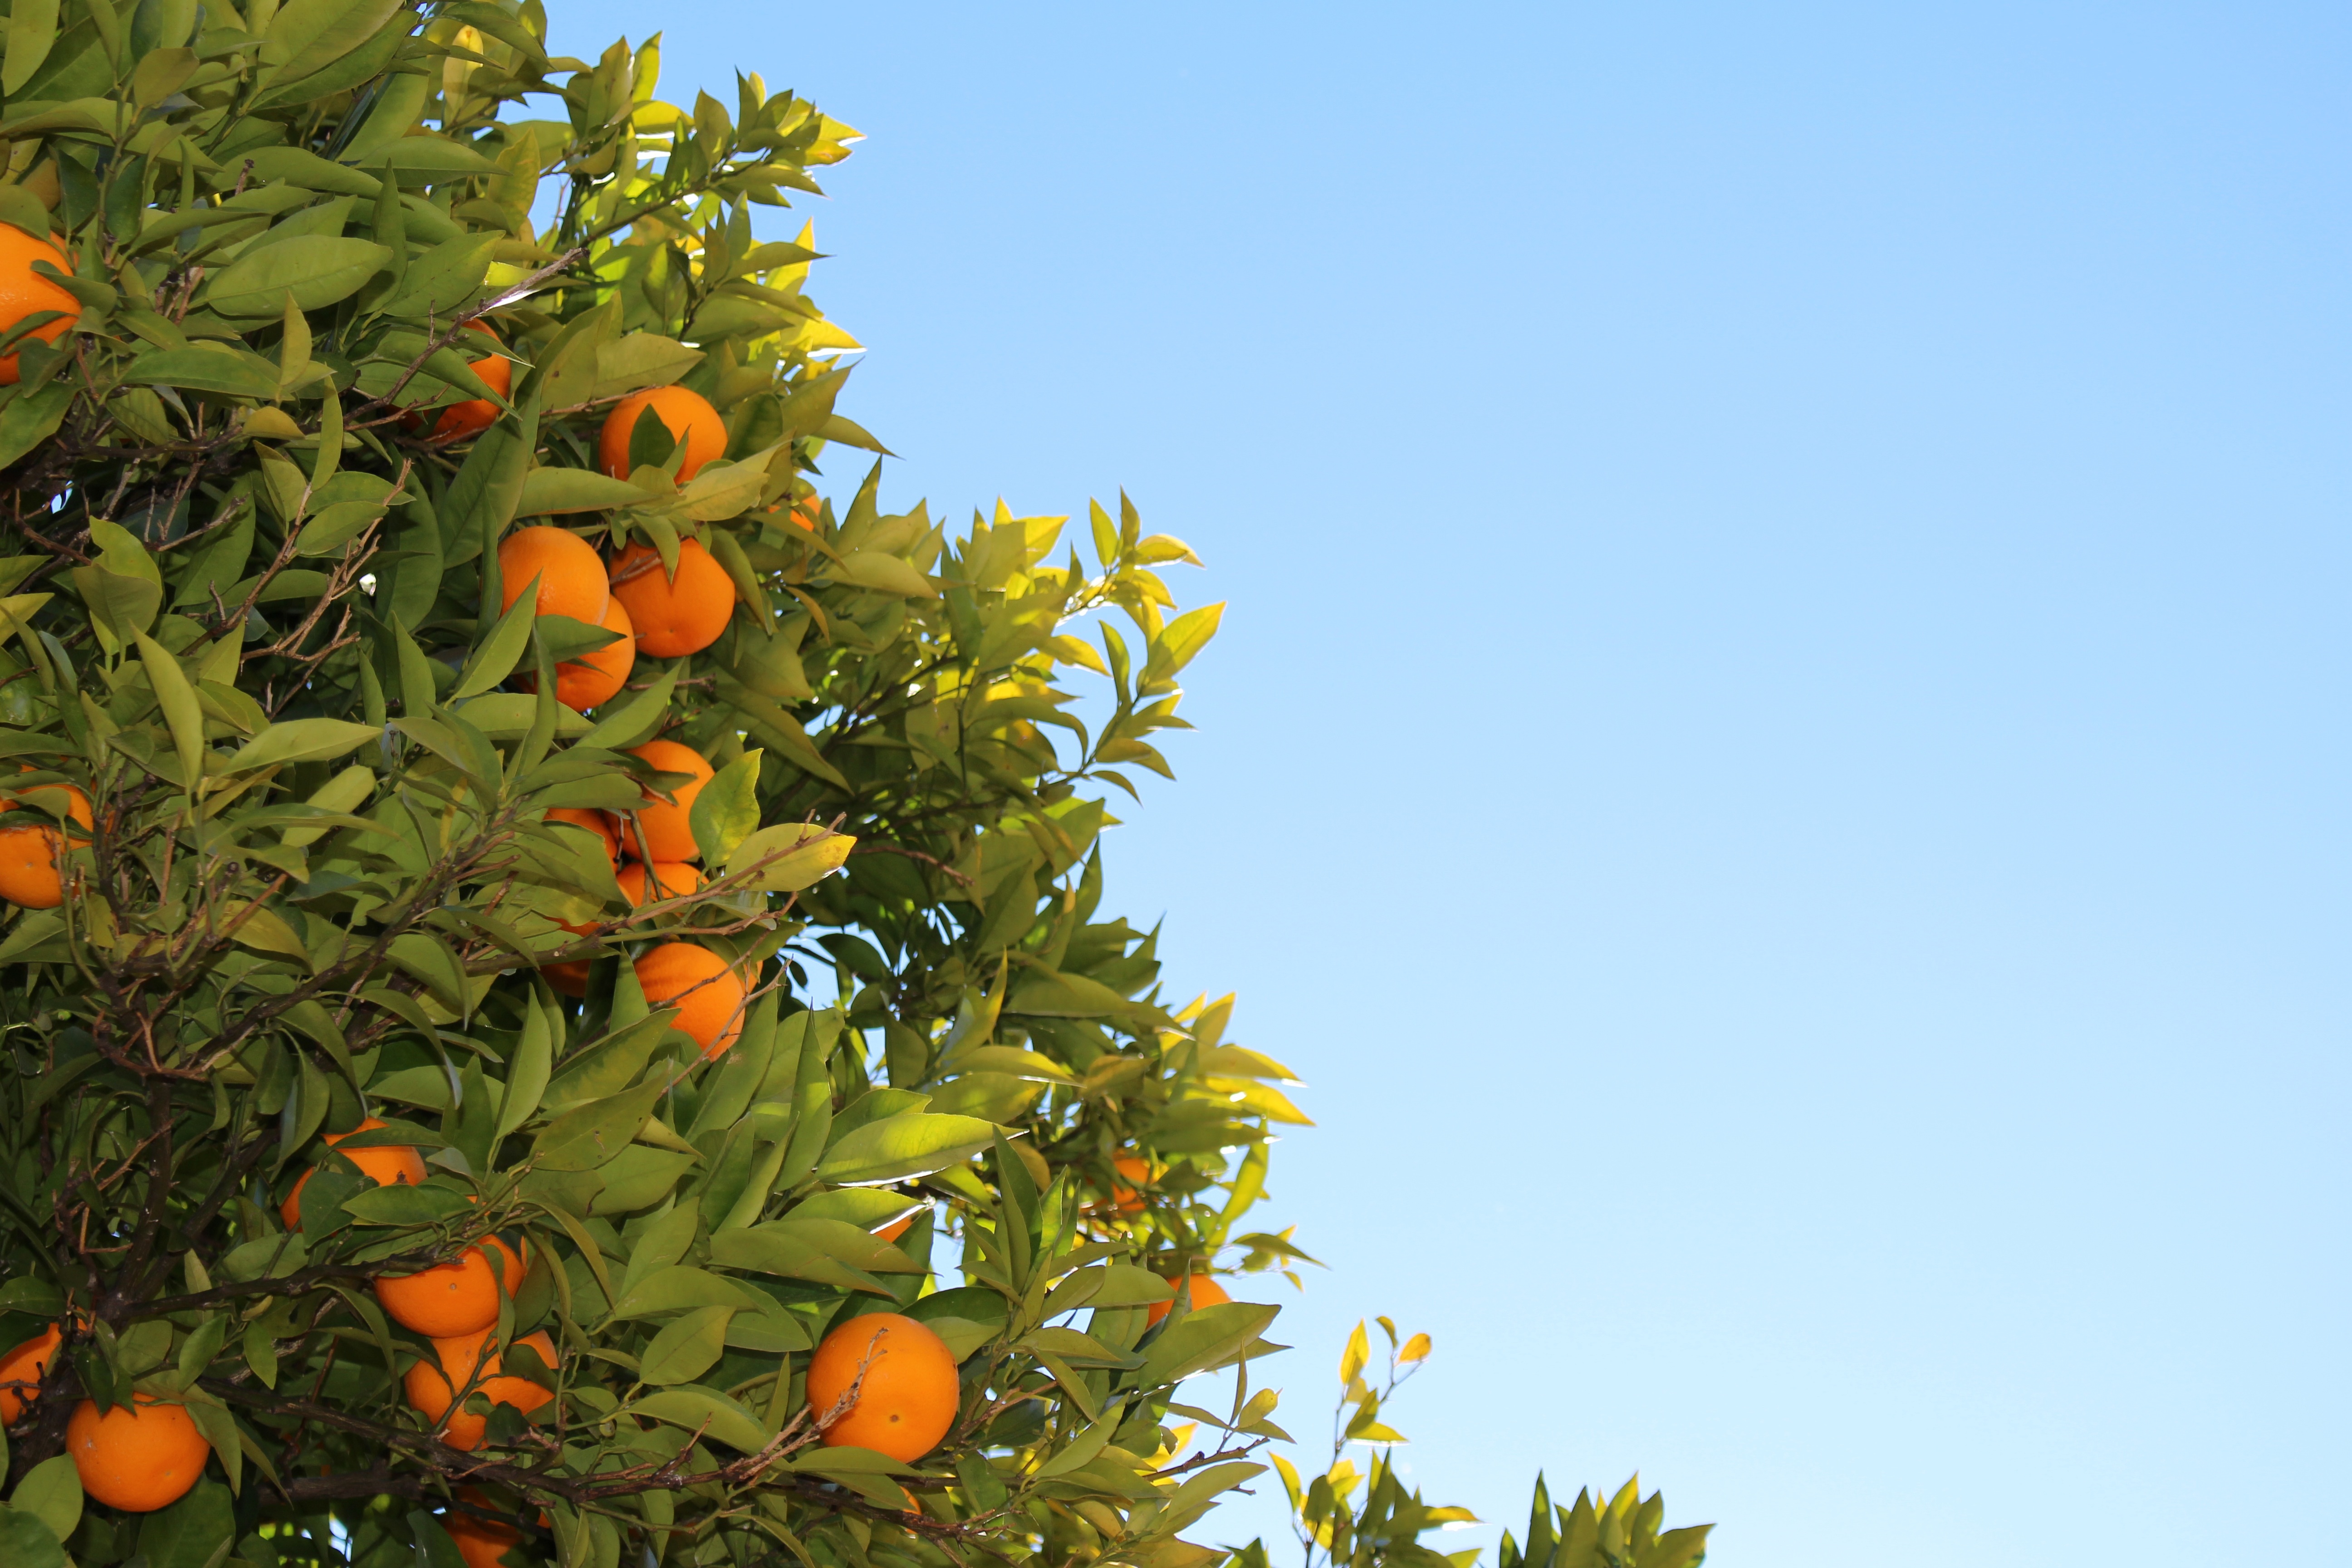 Oranges grow on a tree